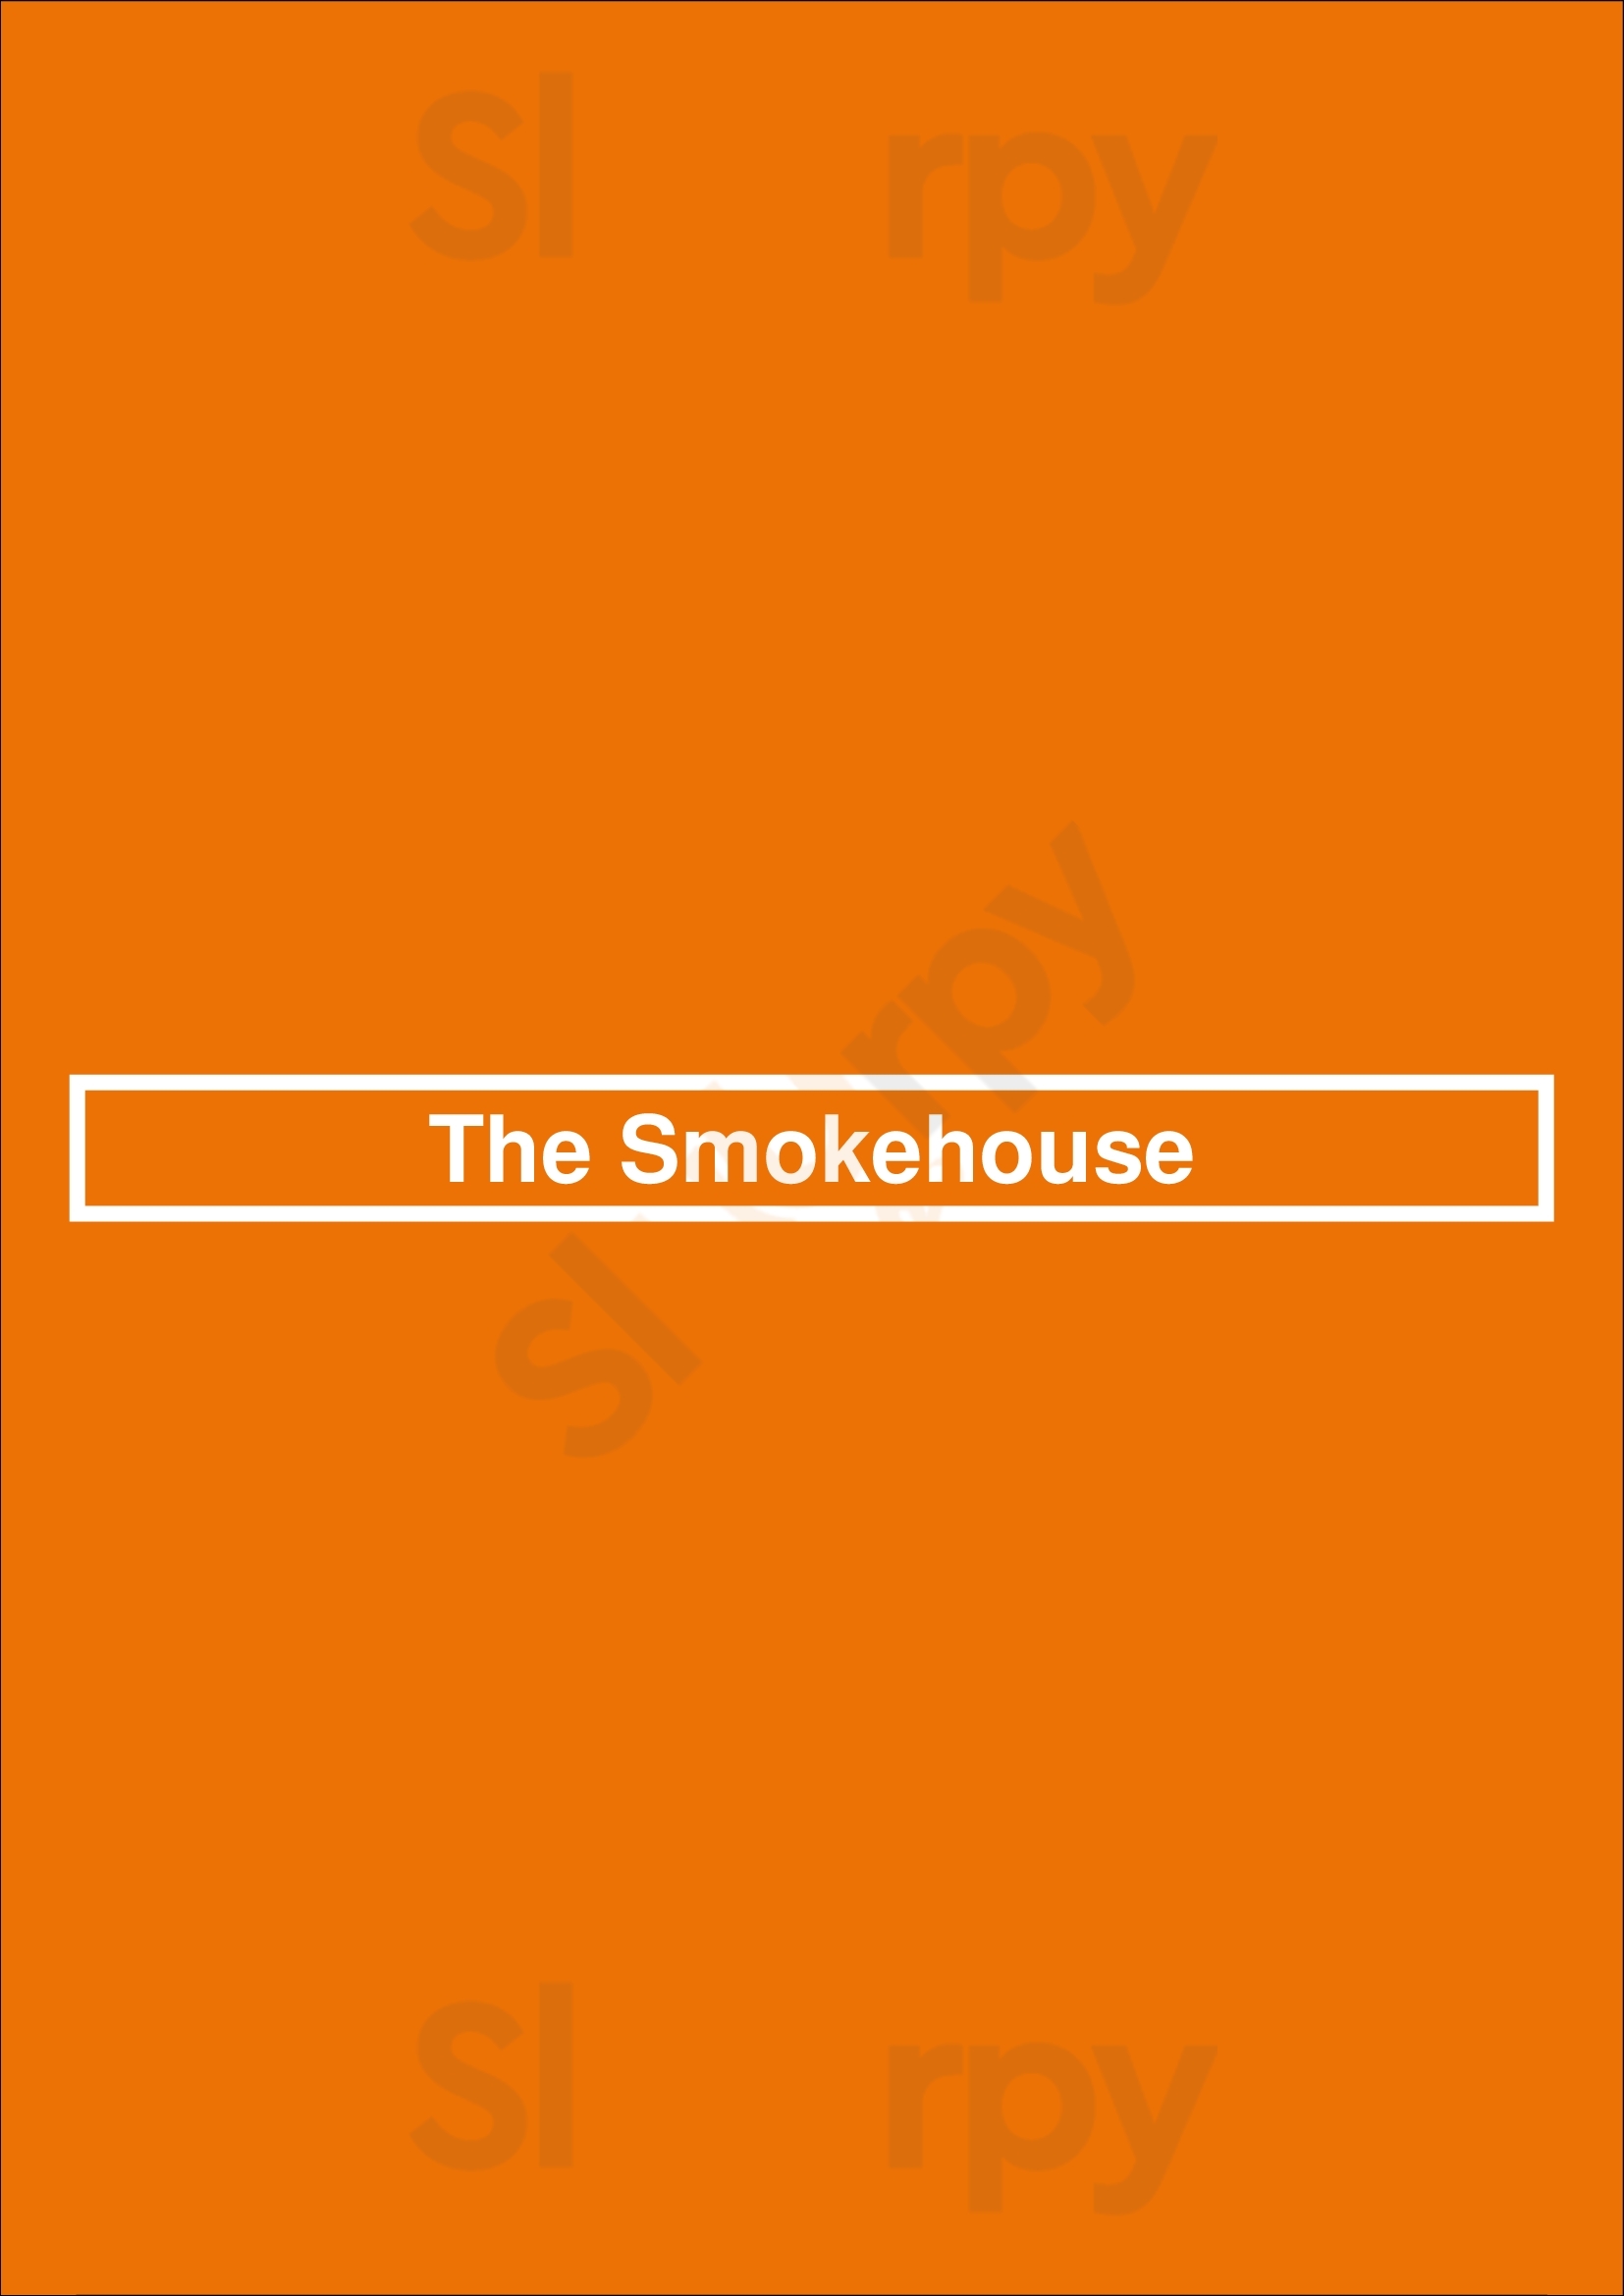 The Smokehouse Spakenburg Menu - 1